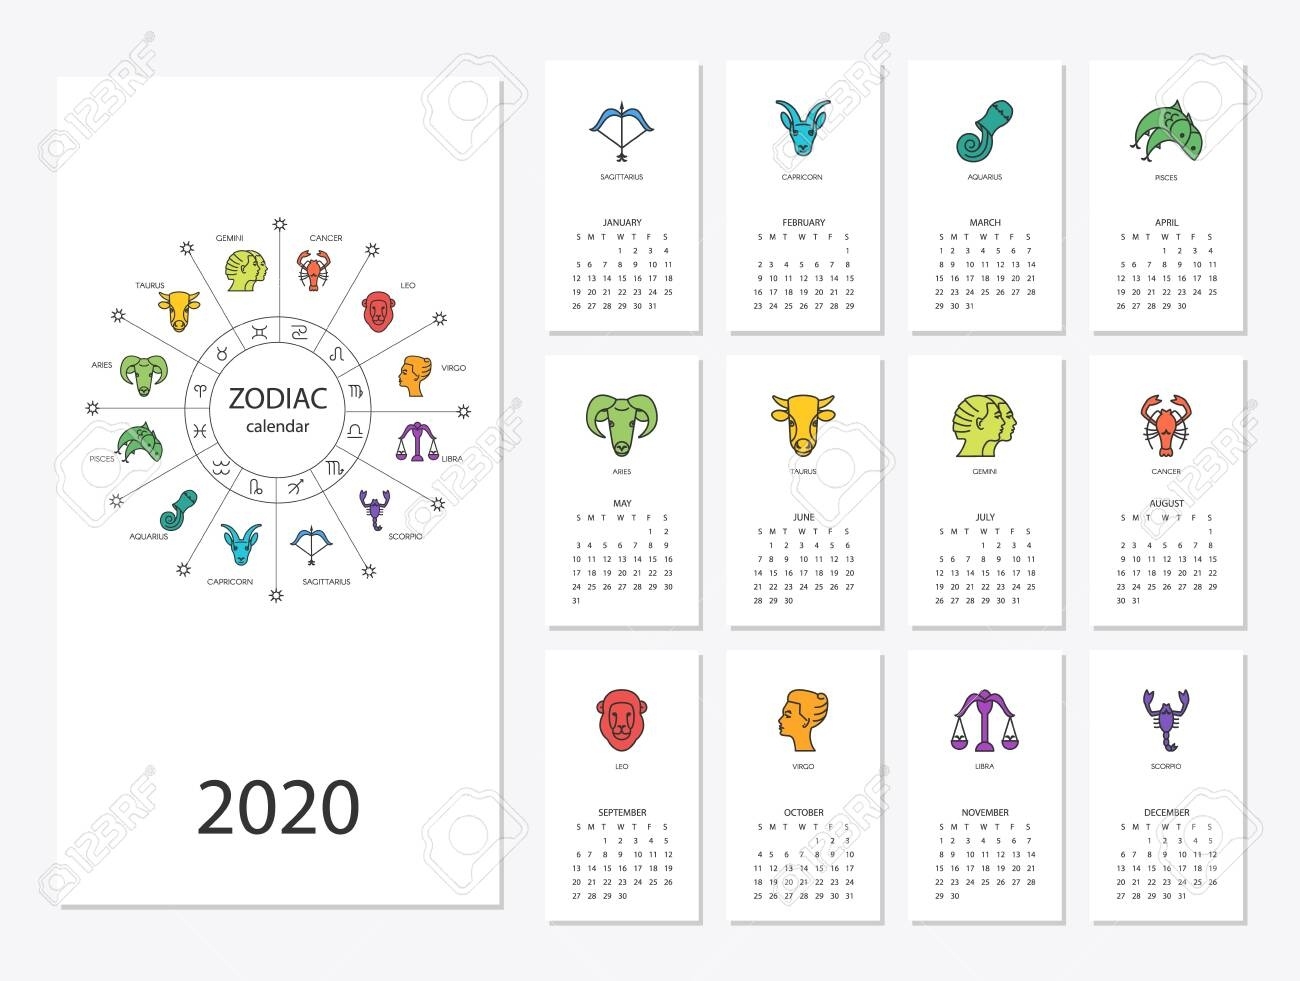 Calendar 2020 With Horoscope Signs Zodiac Symbols Set Calendar Of The Zodiac Signs